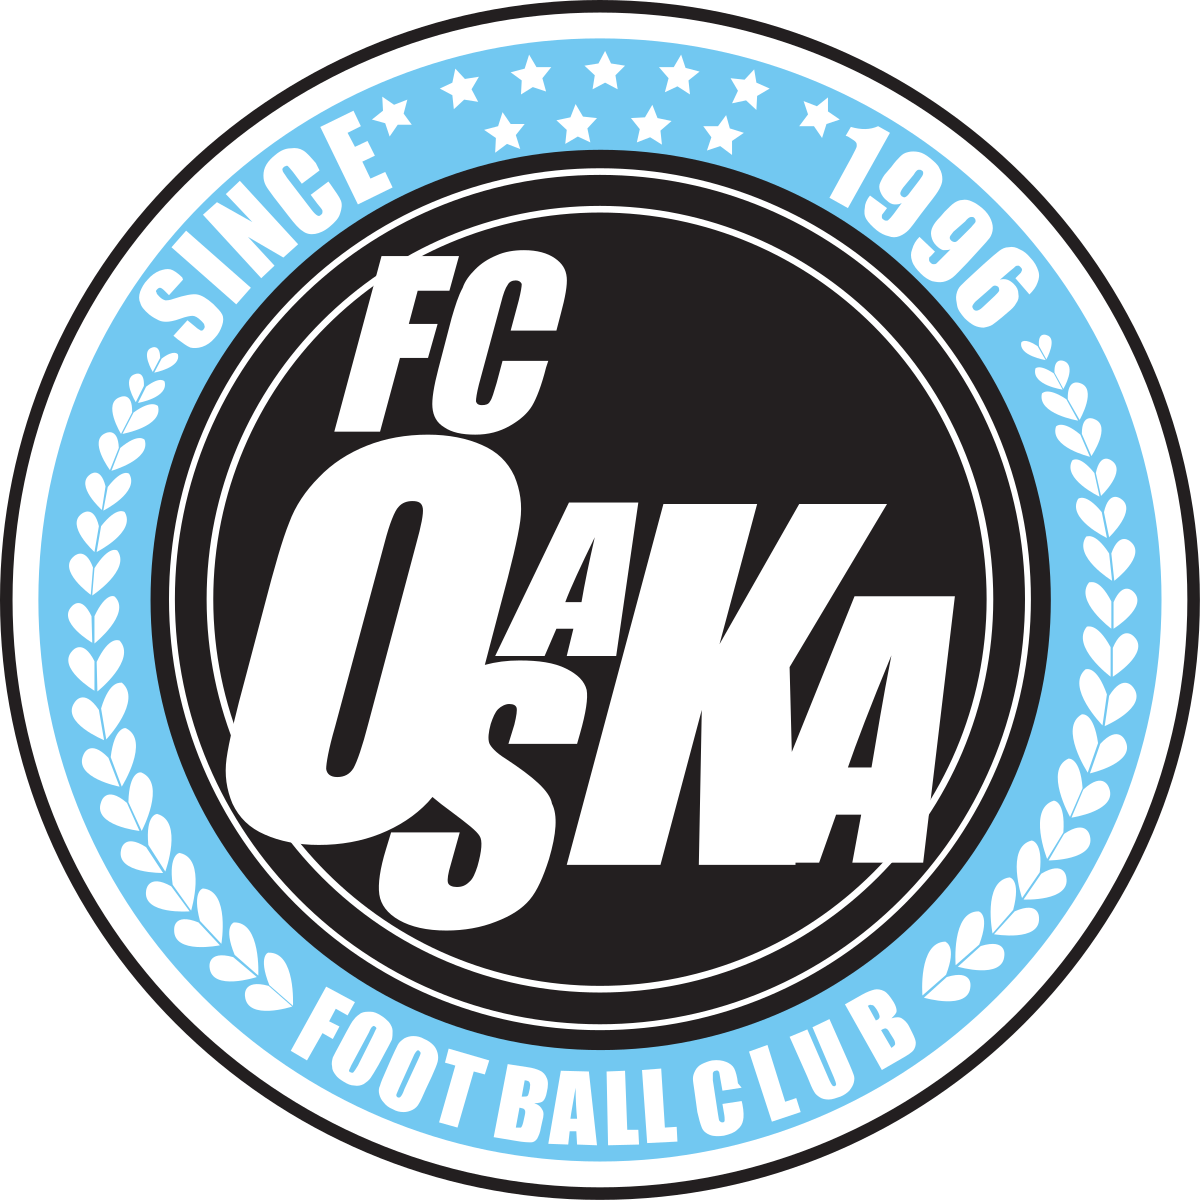 Osaka FC